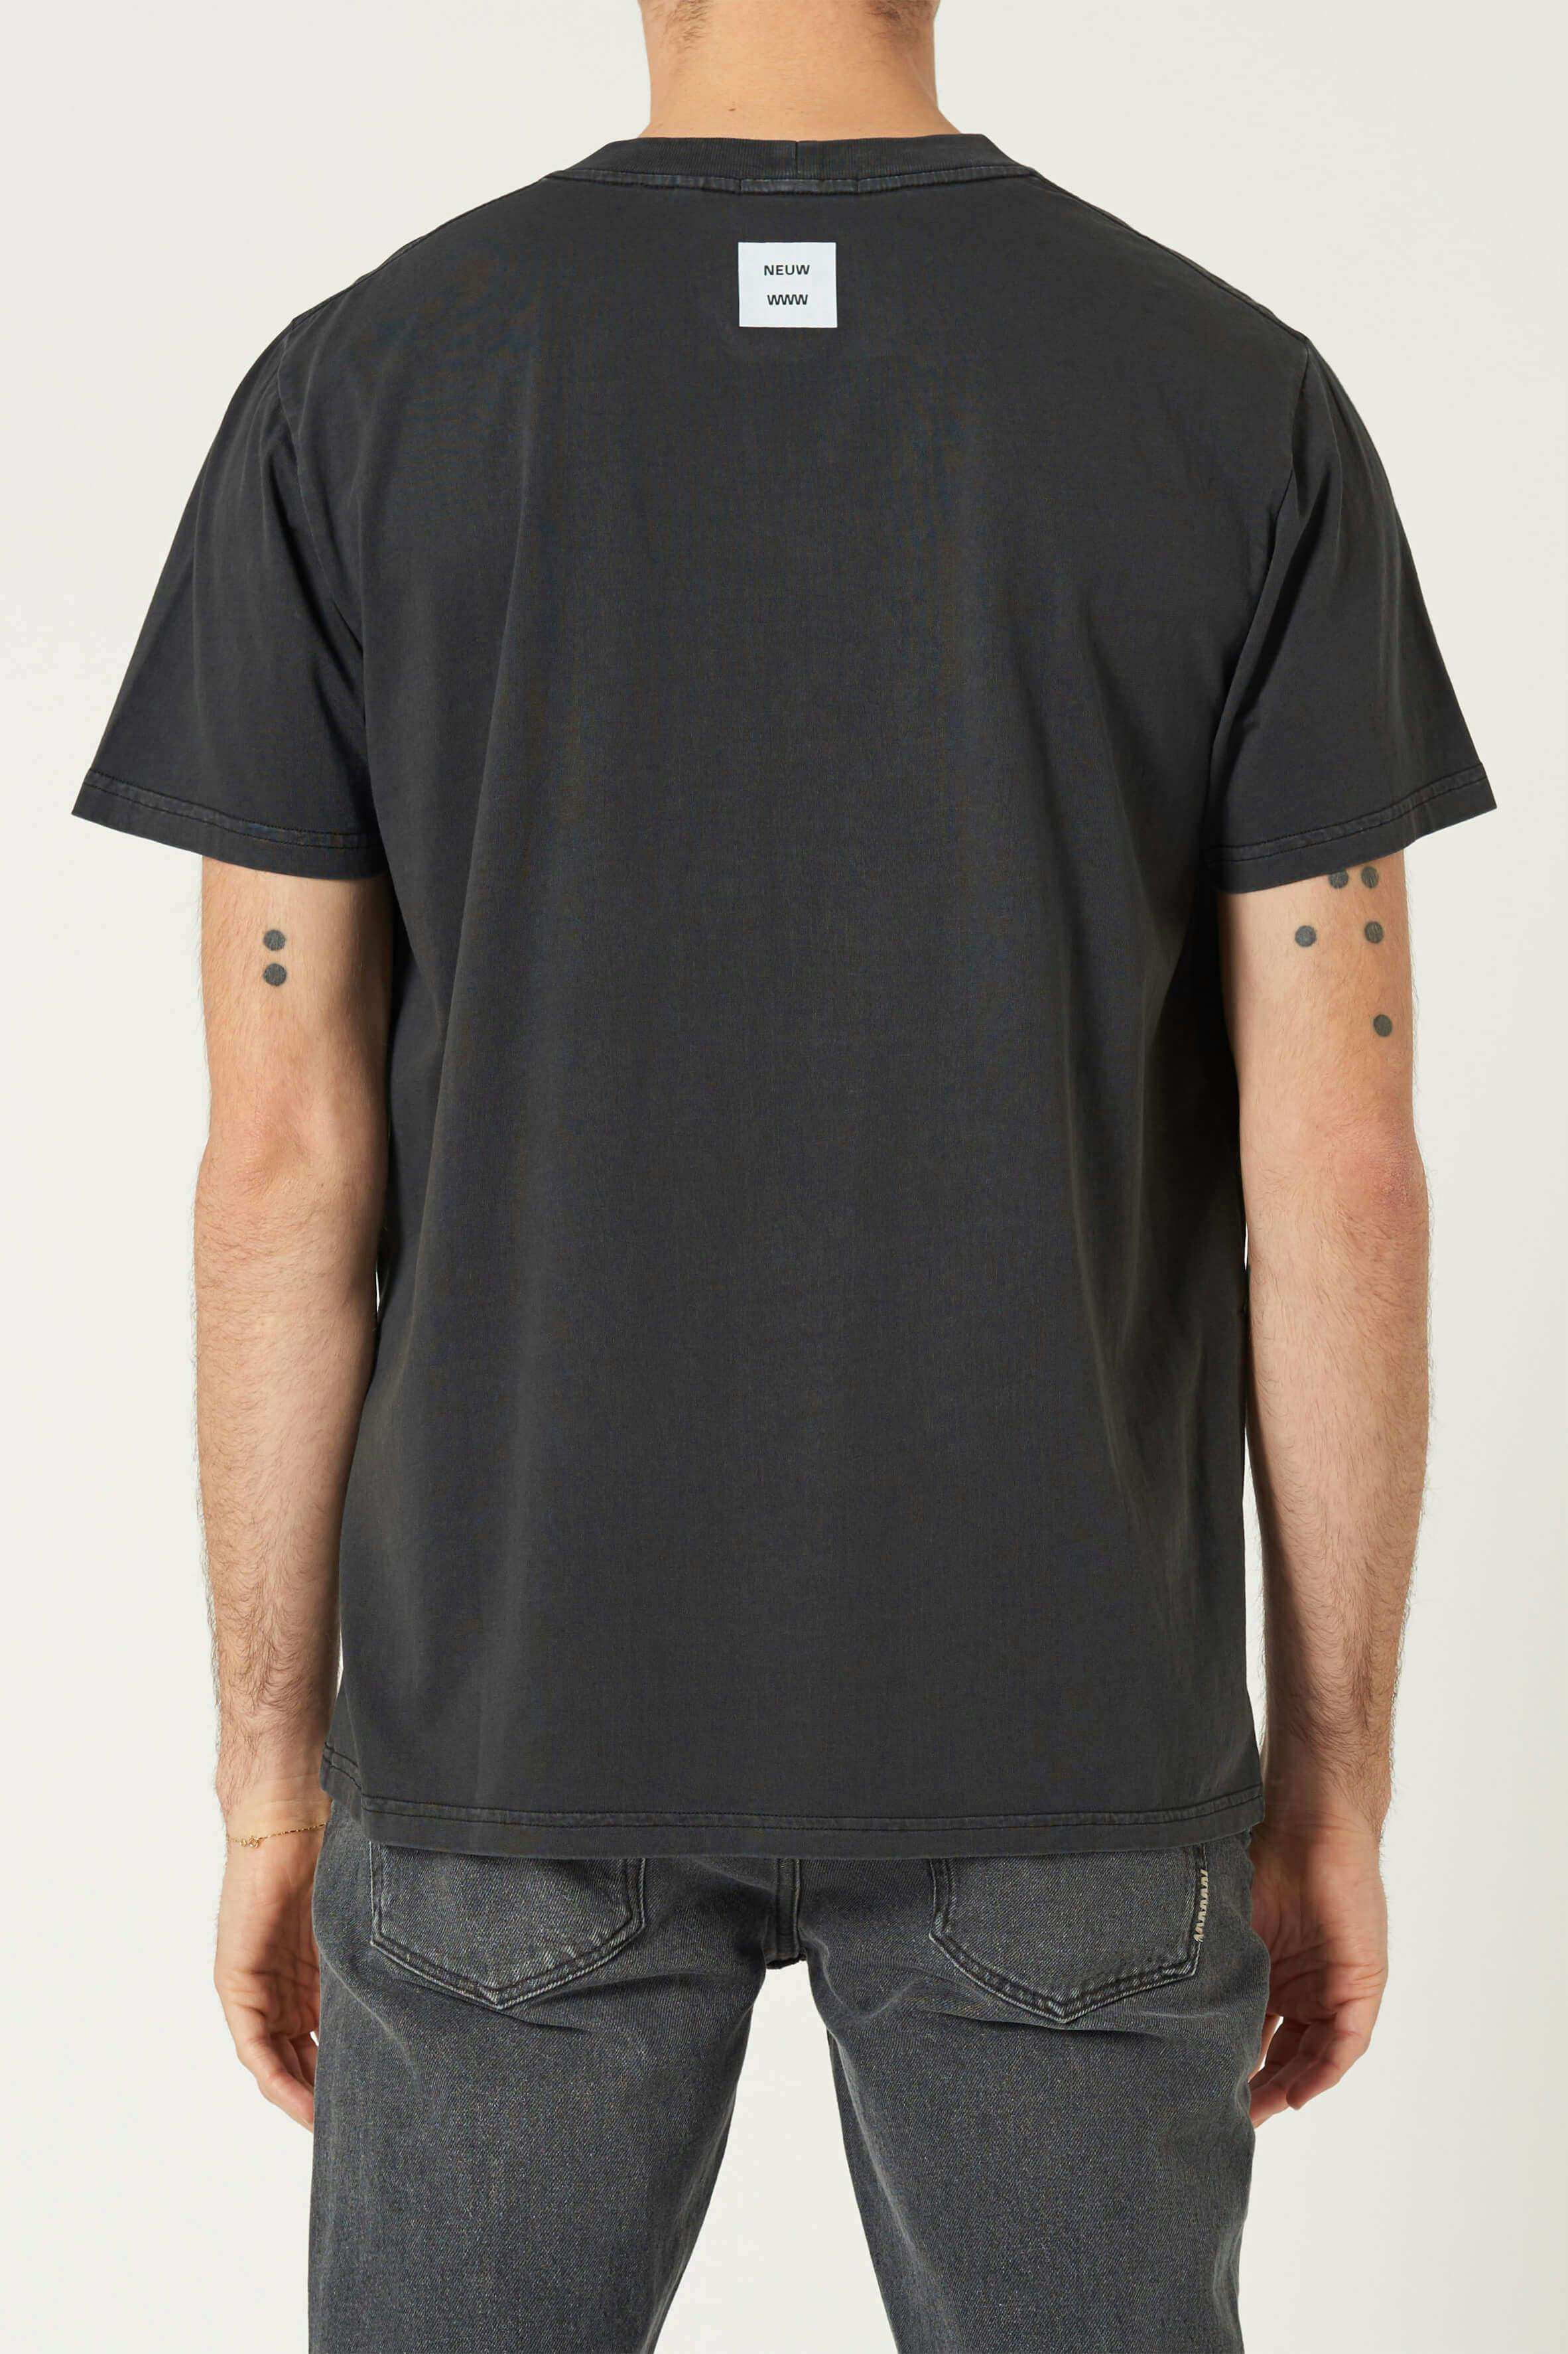 New Order Band Tee - Black Neuw relaxed grey mens-t-shirt 